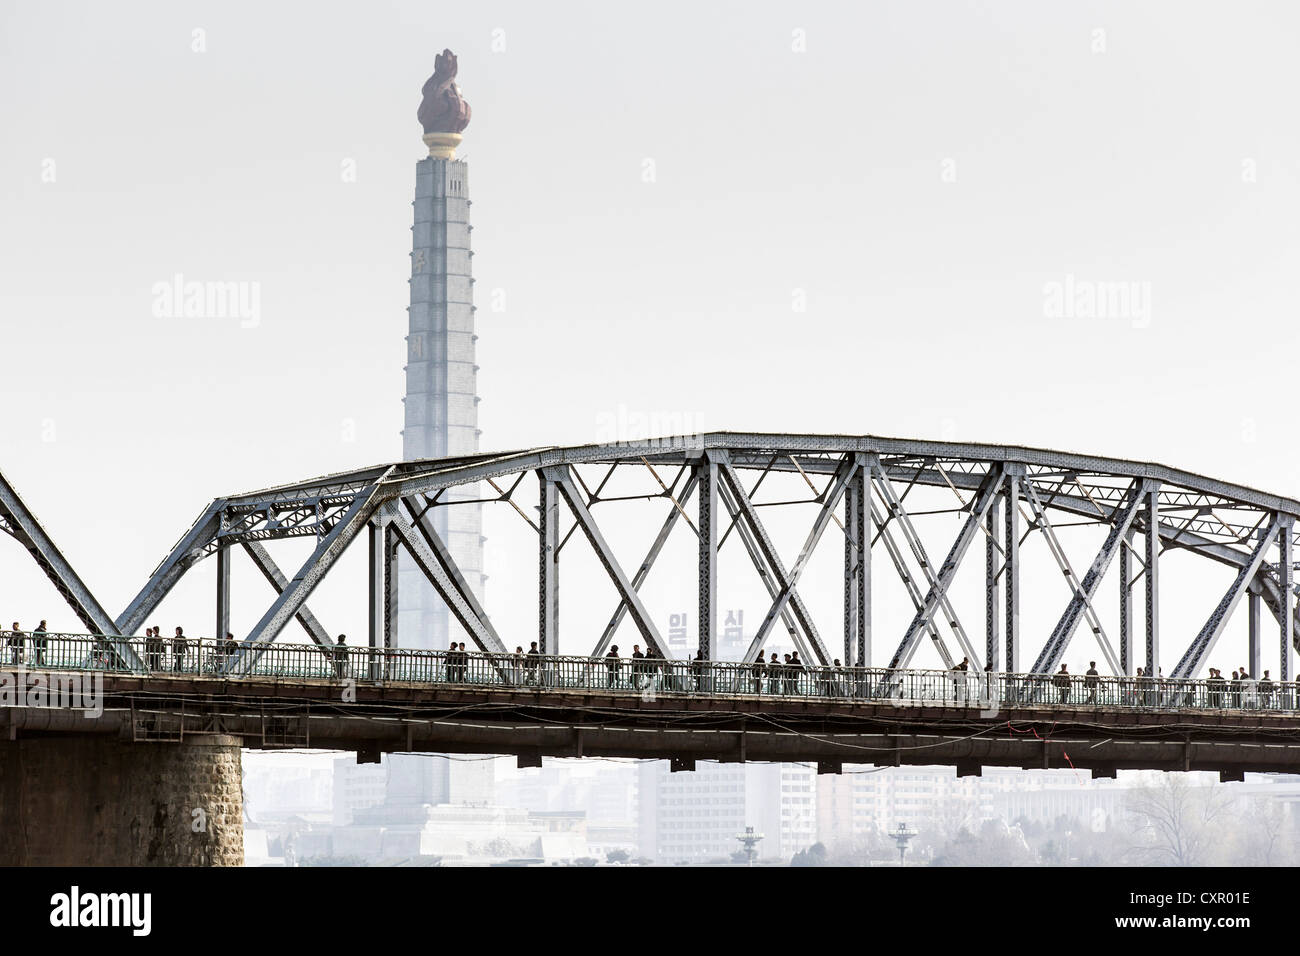 Democratic Peoples's Republic of Korea (DPRK), North Korea, Pyongyang, Bridge crossing the Taedong river, Juche Tower (symbol of Stock Photo